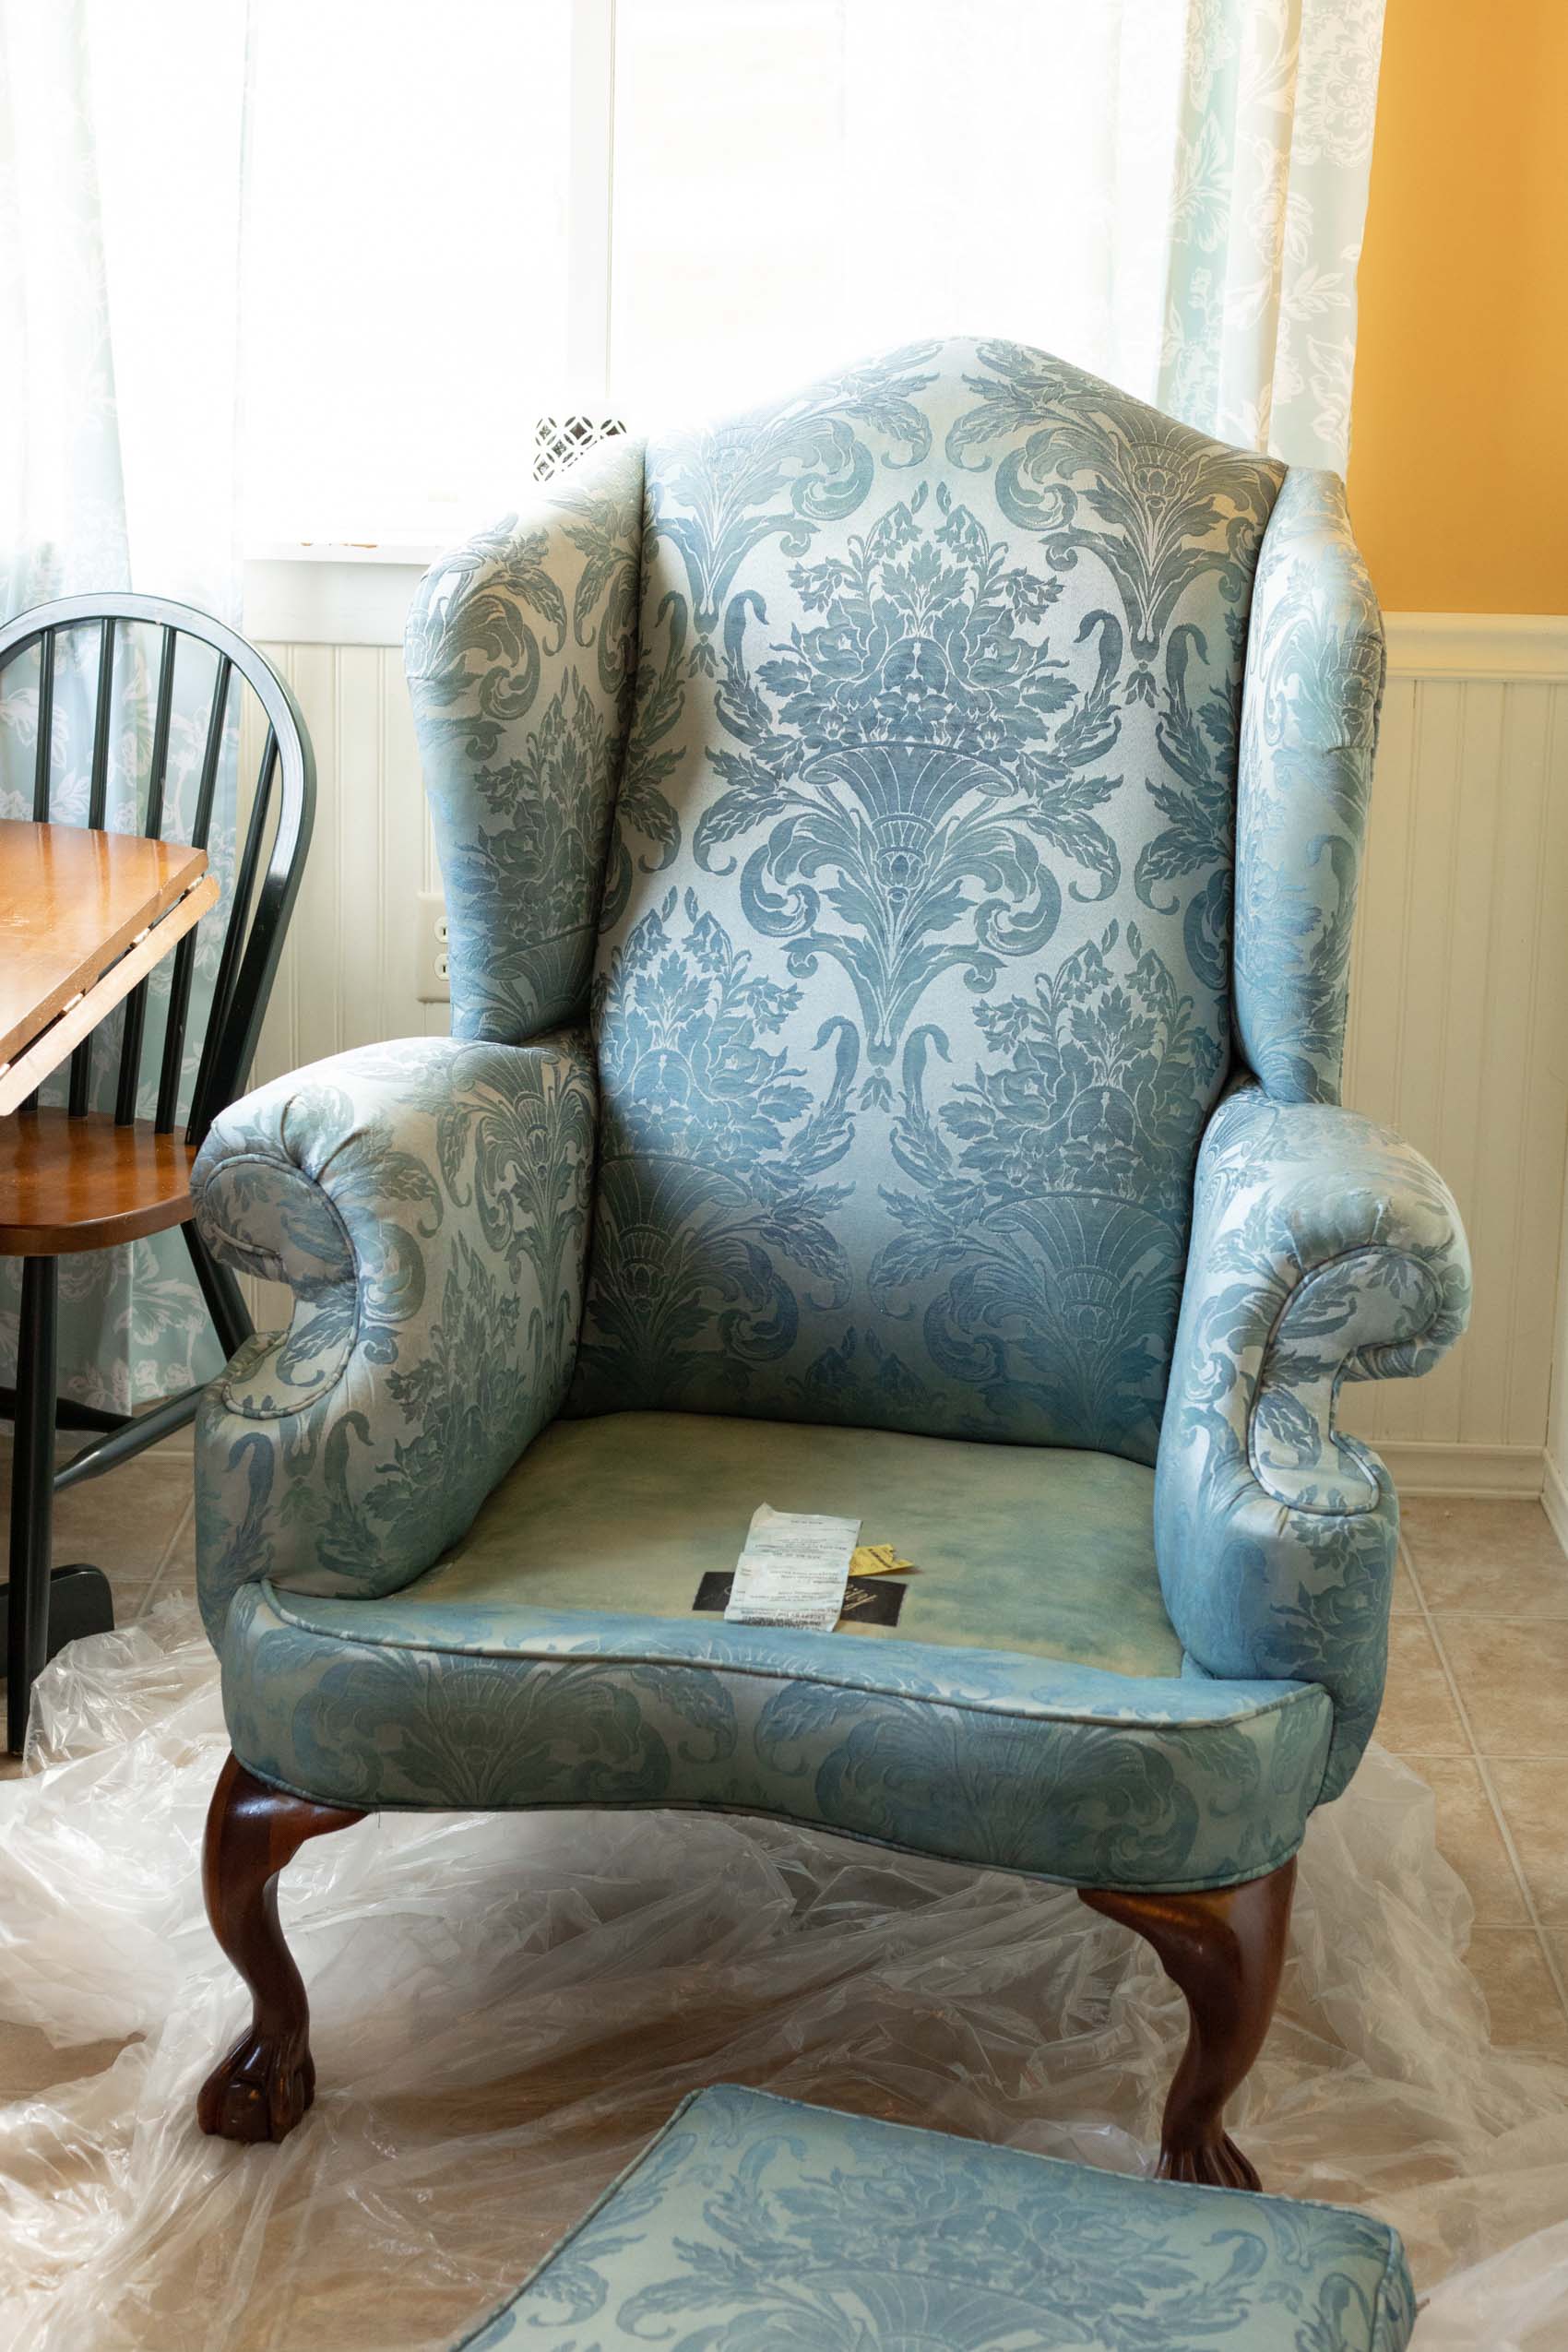 How to Dye a Fabric Chair - Rit Dye Tutorial - Allyn Lewis